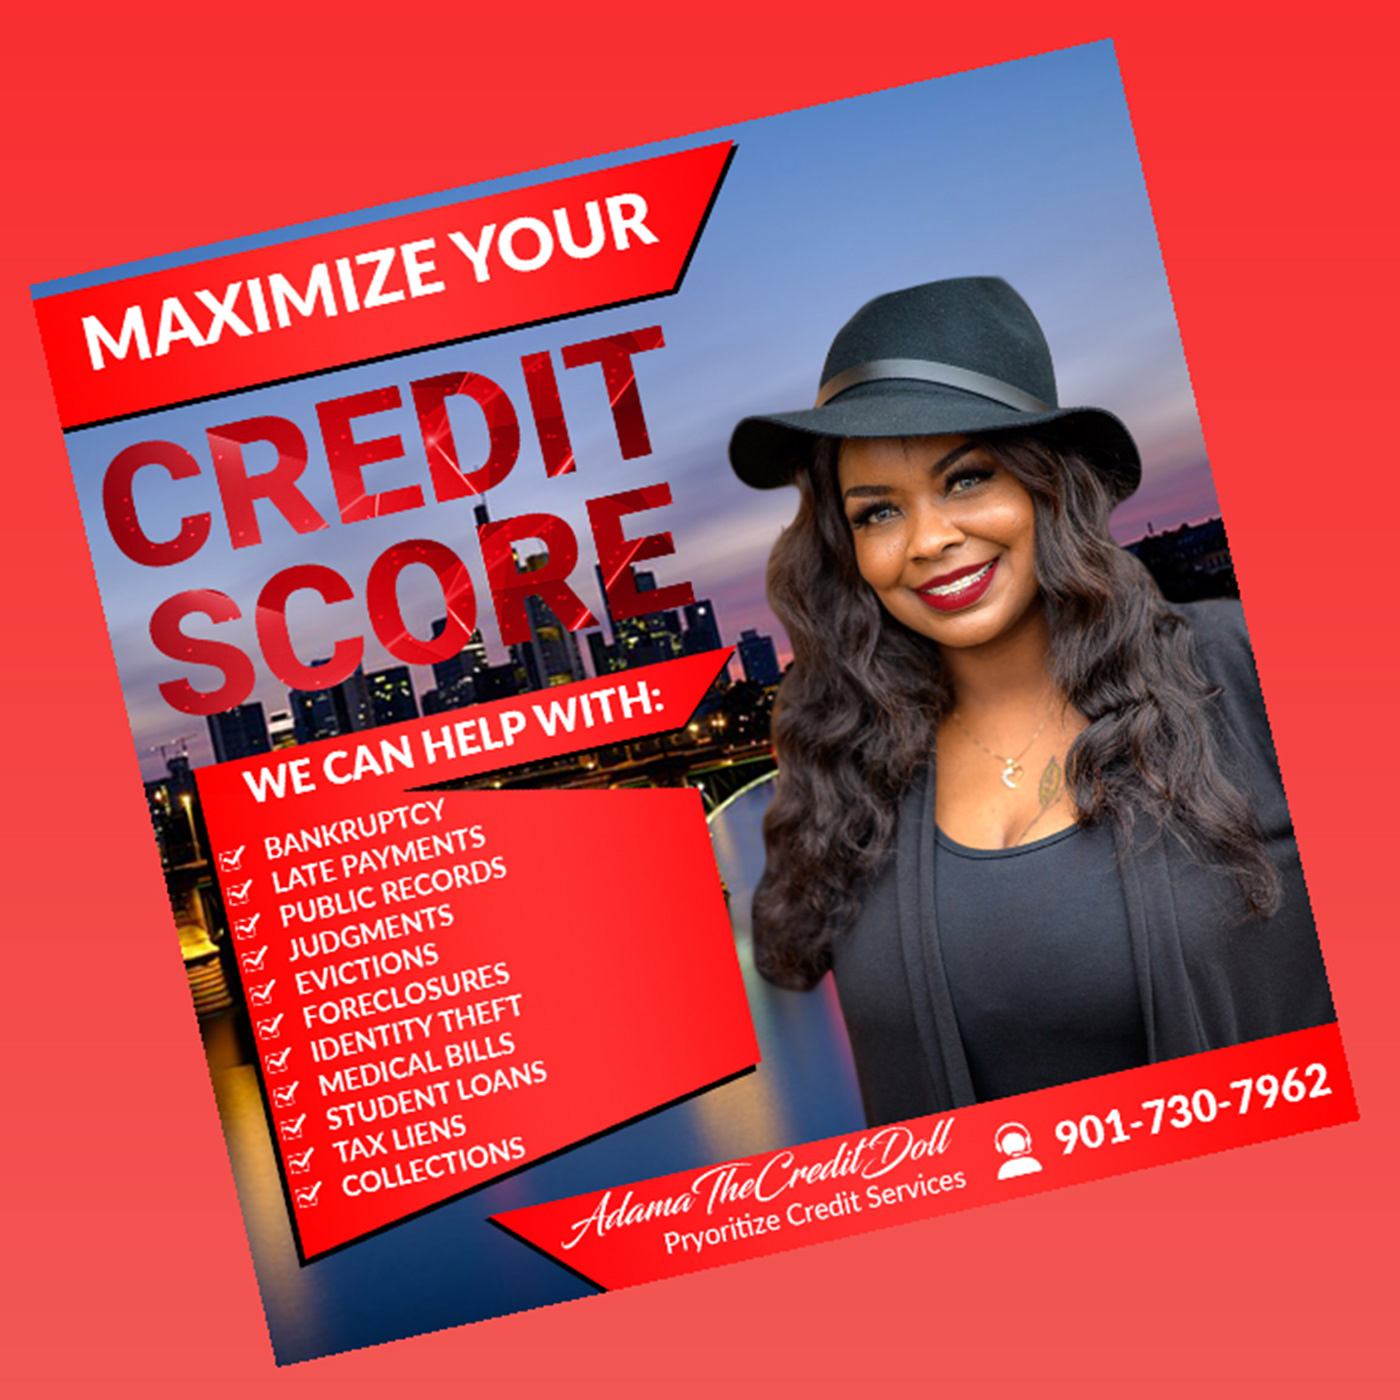 #credit #creditrepair #realestate #entrepreneur #creditscore #finance   #badcredit flyer Event business Flyers